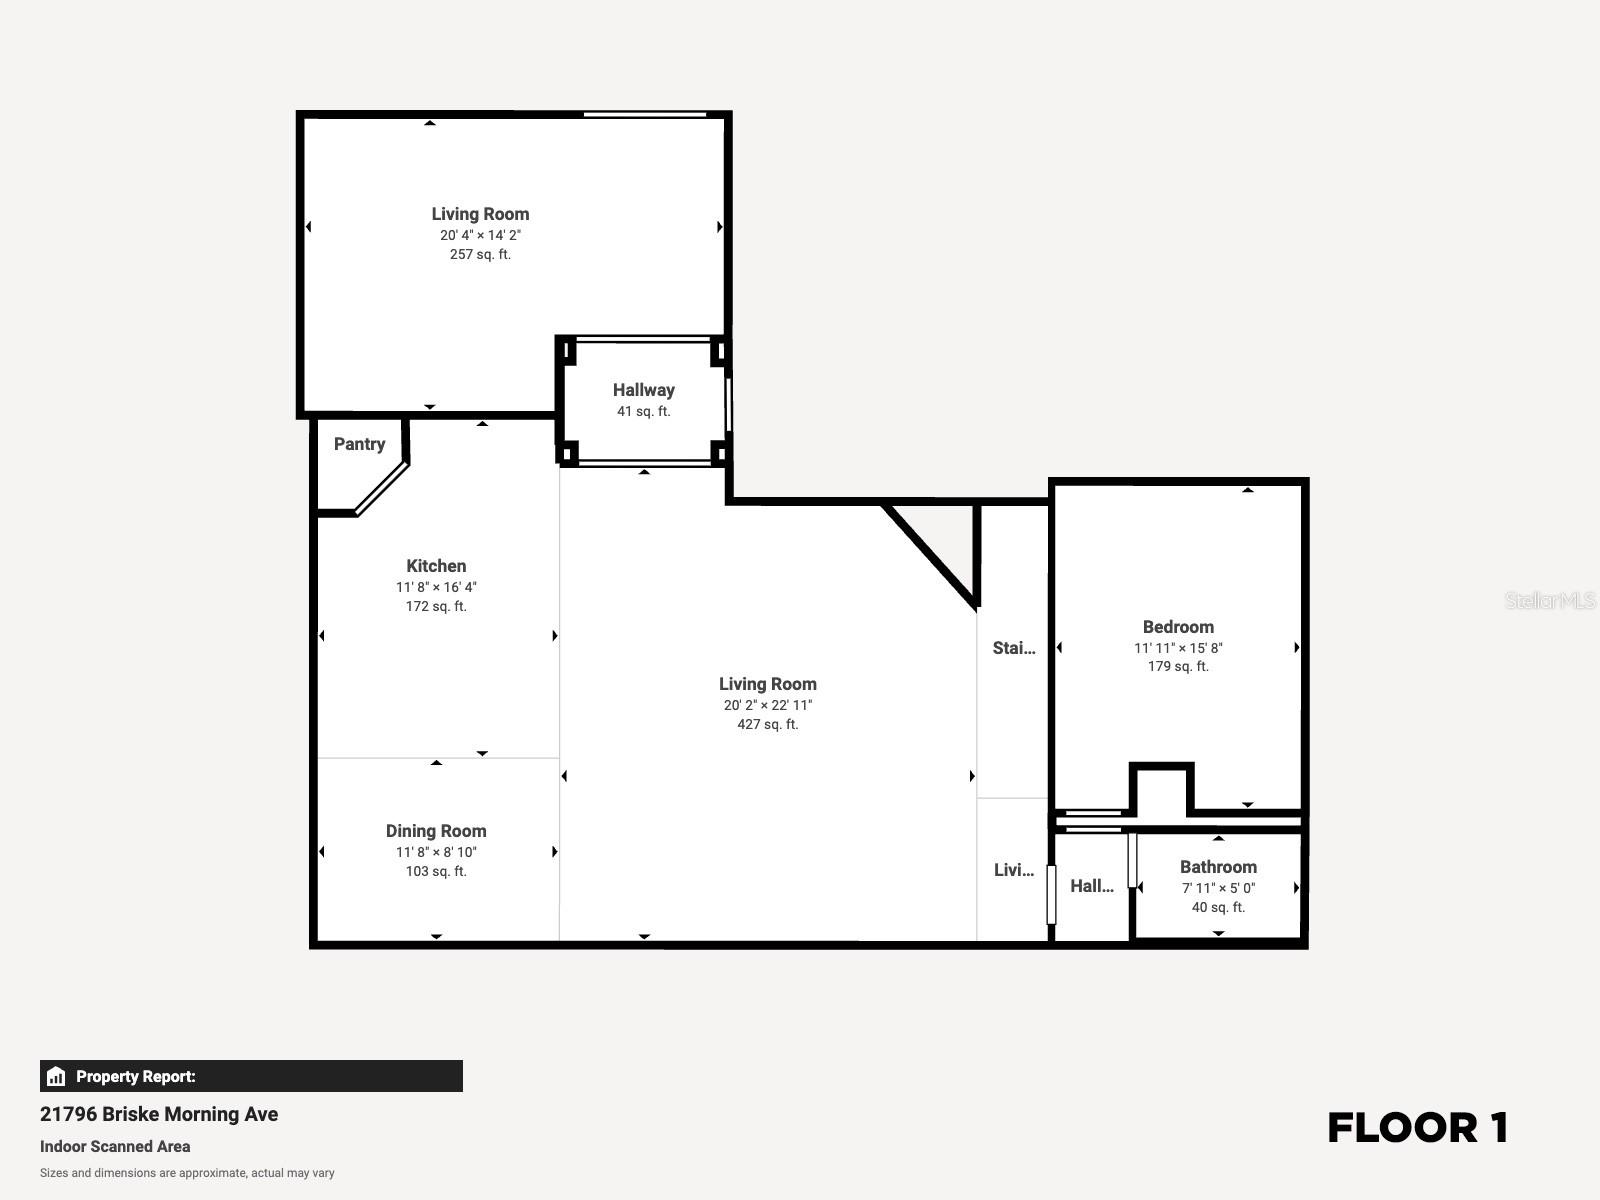 Floorplan - Main Floor